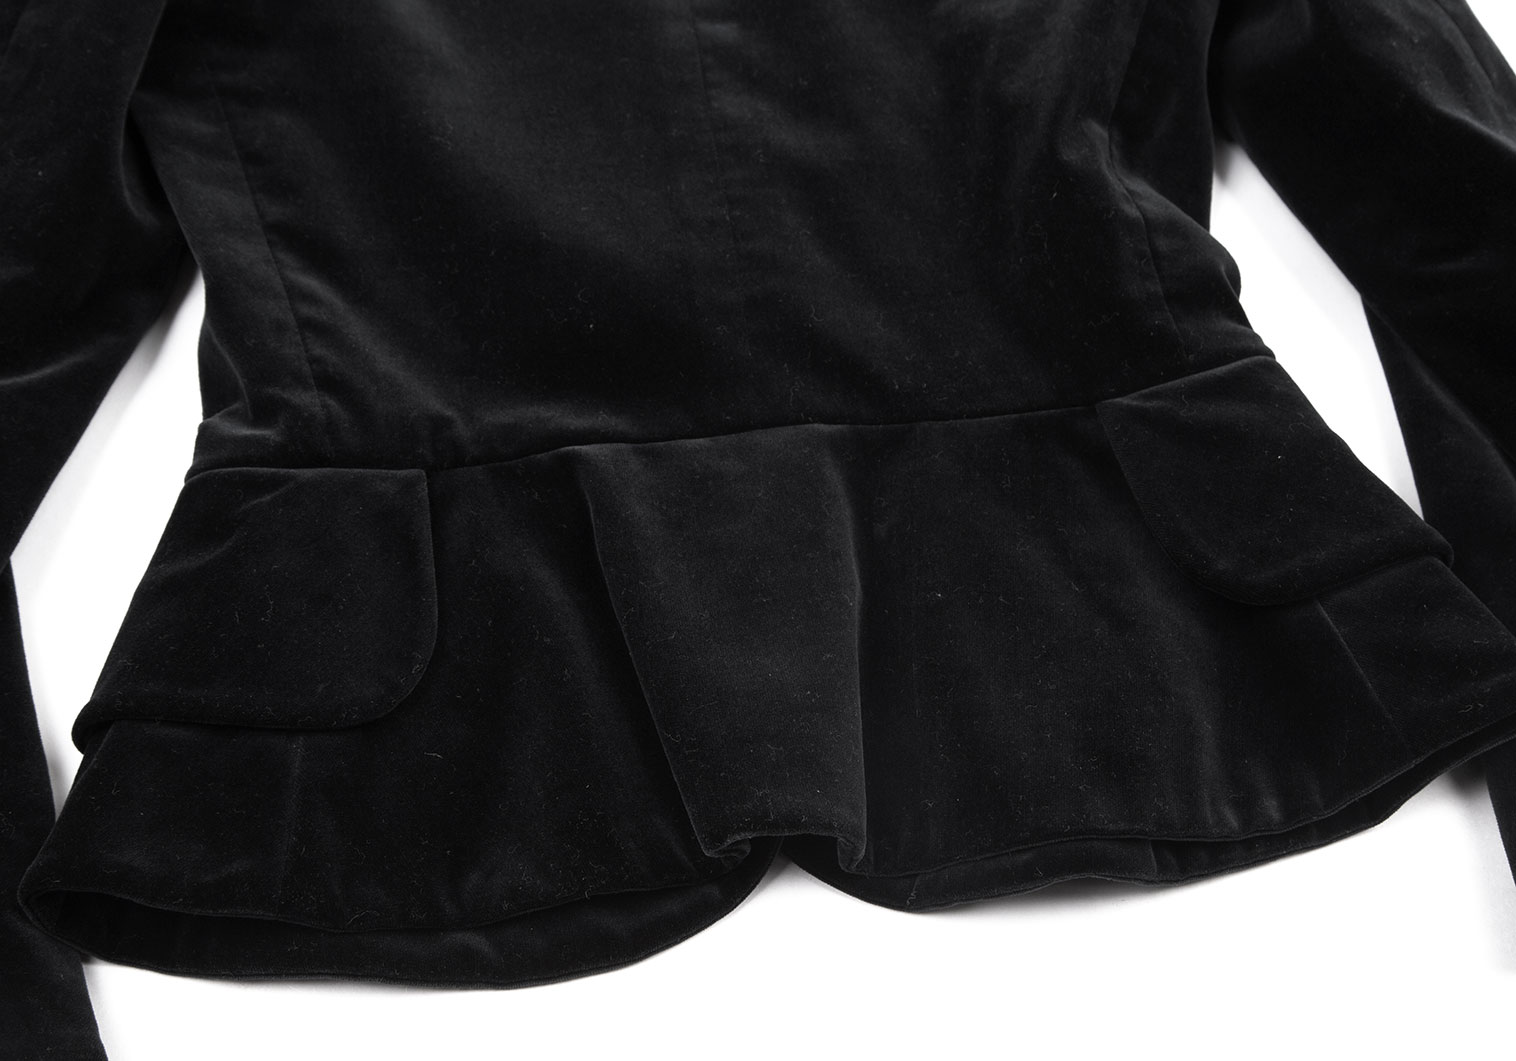 Vivienne Westwood ベロア ジャケット ブラック 黒 size1